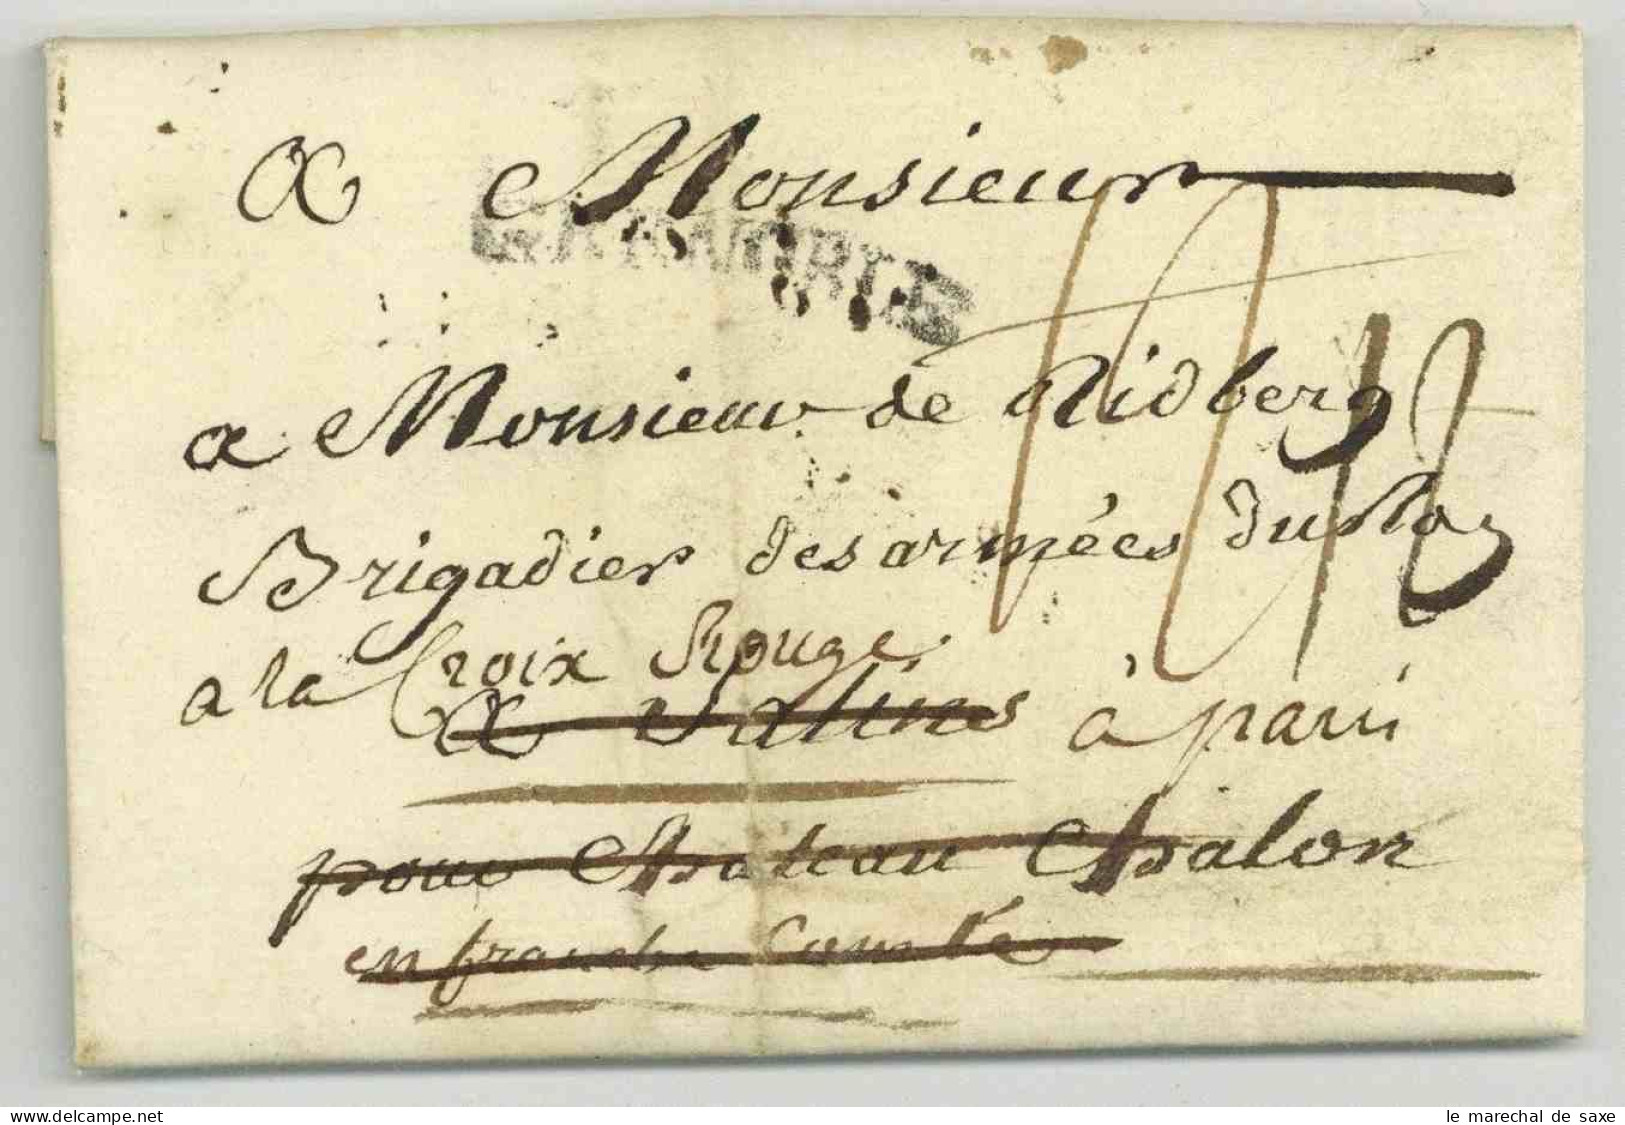 Pierre Joseph De Bourcet (1700-1780) Ingenieur Cartographe Lieutenant General Autographe Grenoble 1779 Deboursé Salins - Historische Personen